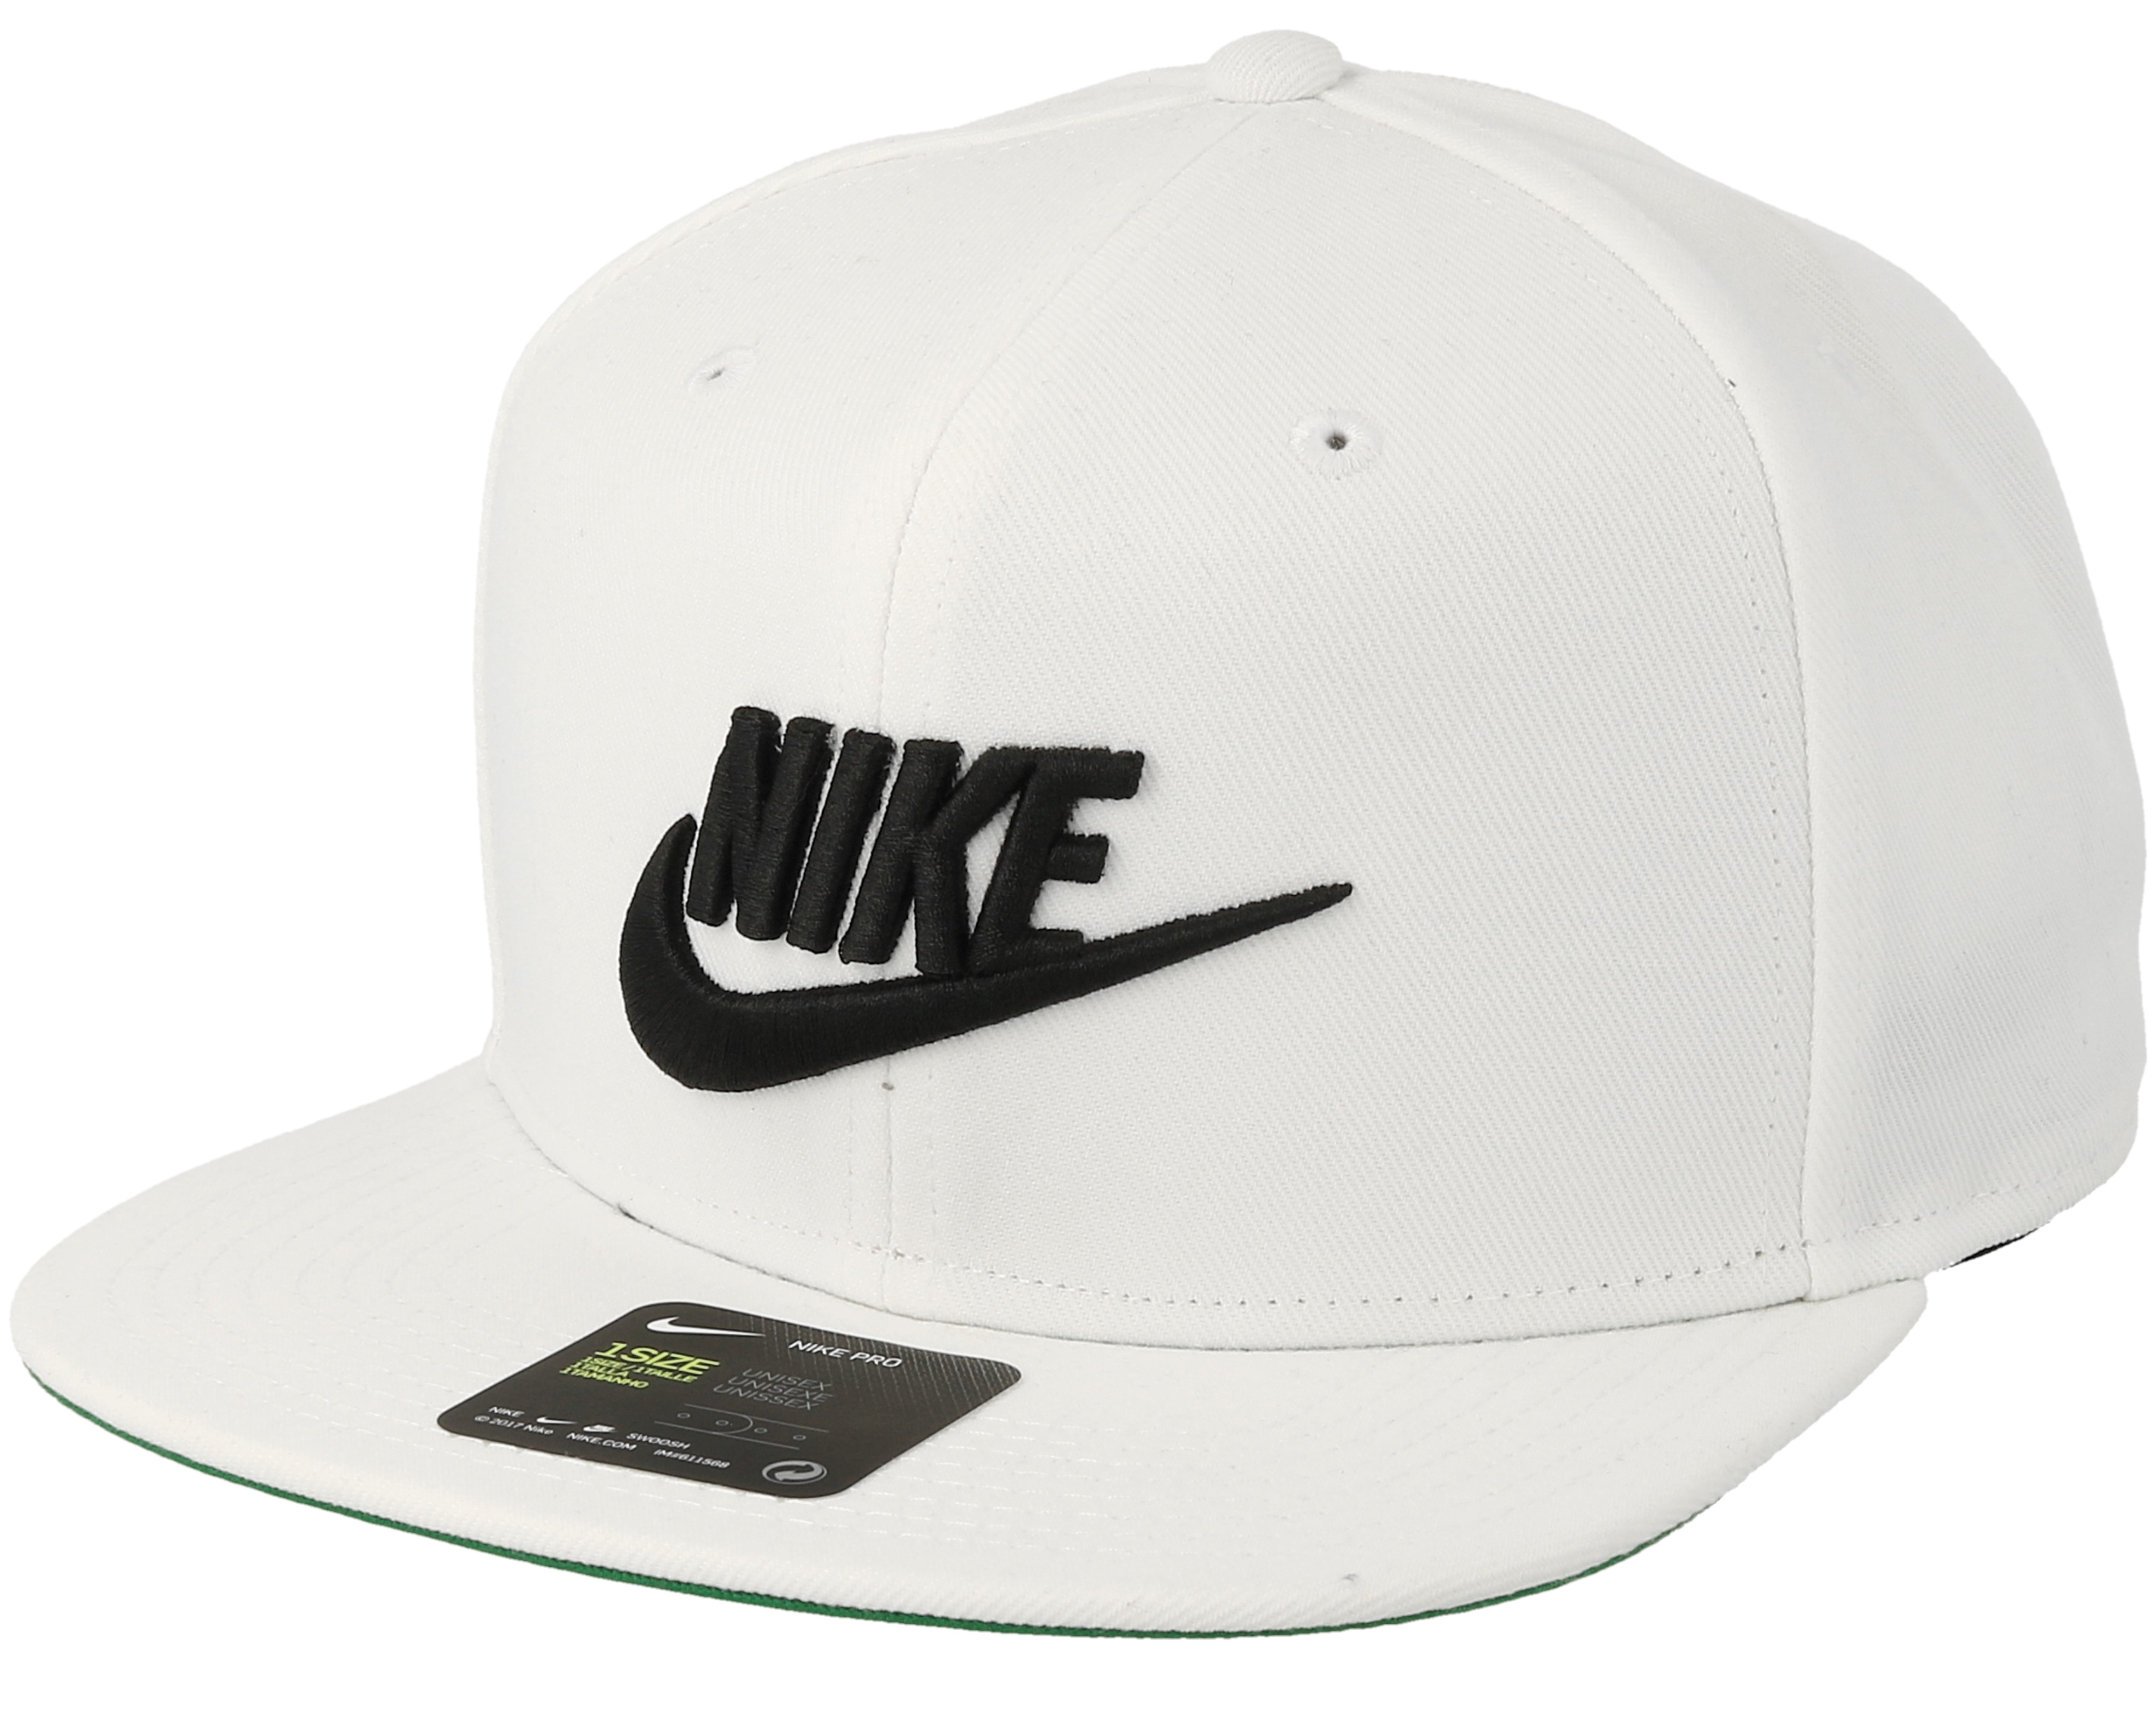 True future. Снэпбэк Nike. Nike Snapback белая. White Nike cap. White cap by Nike.